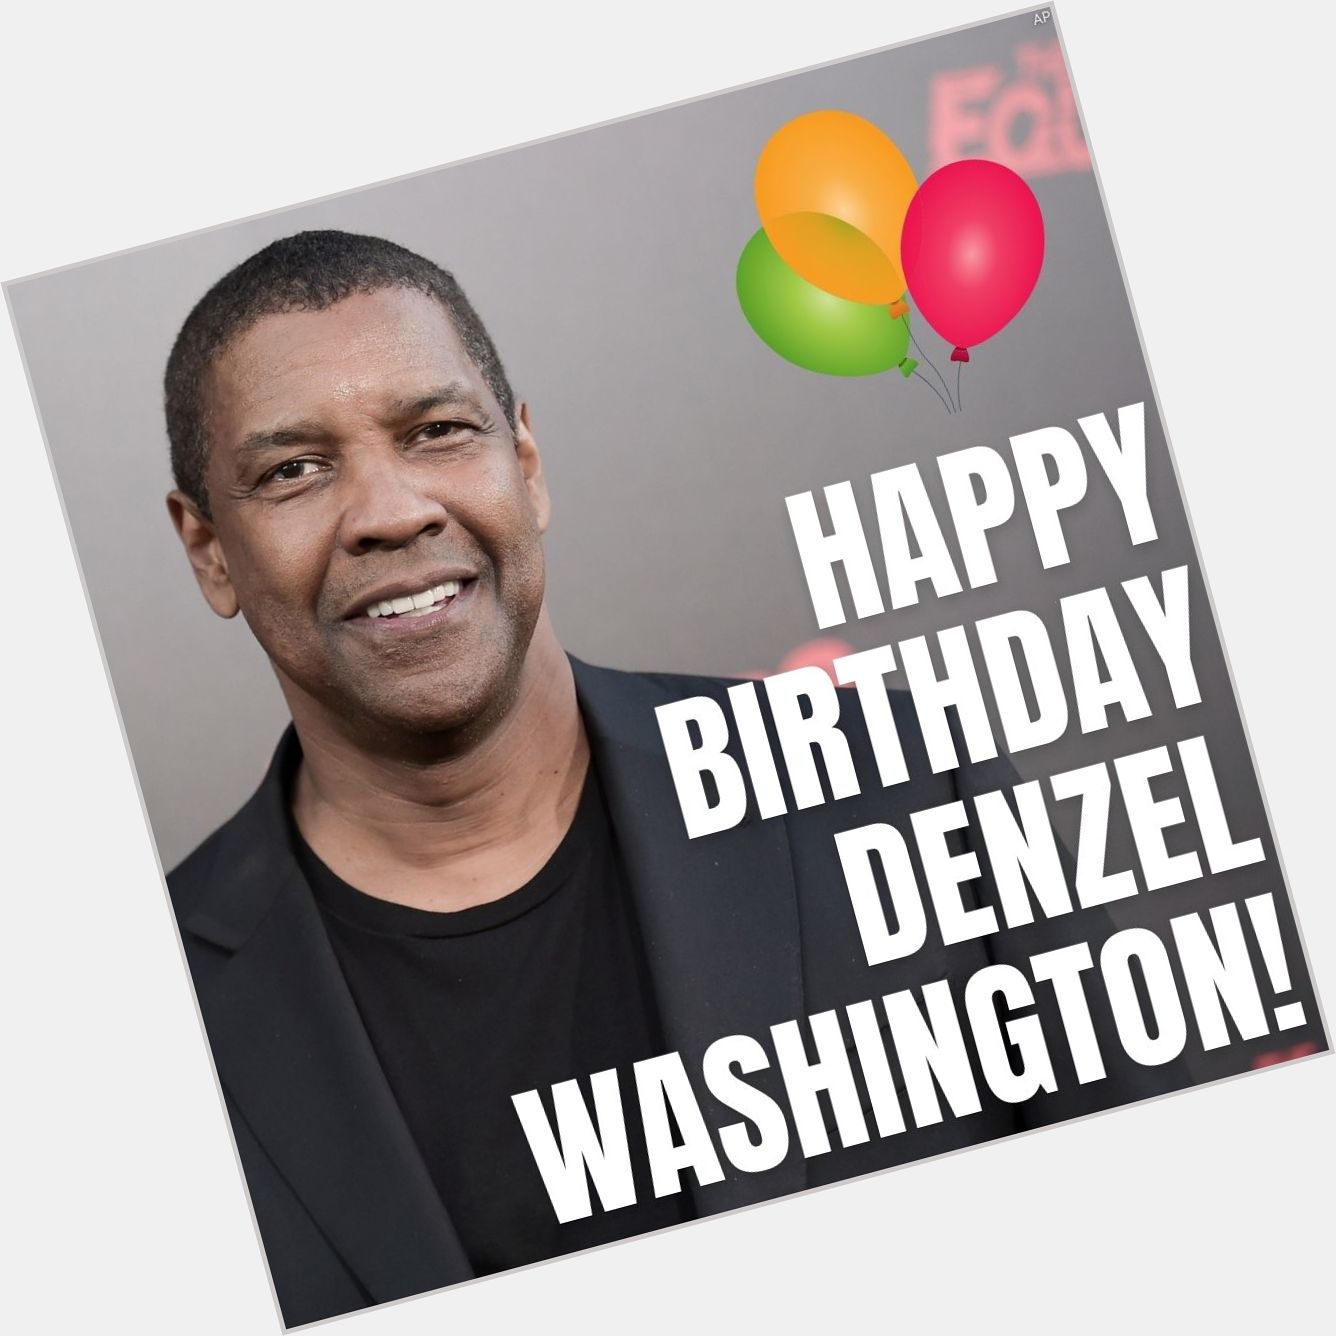 Happy Birthday Denzel Washington! What is your favorite Washington performance? 